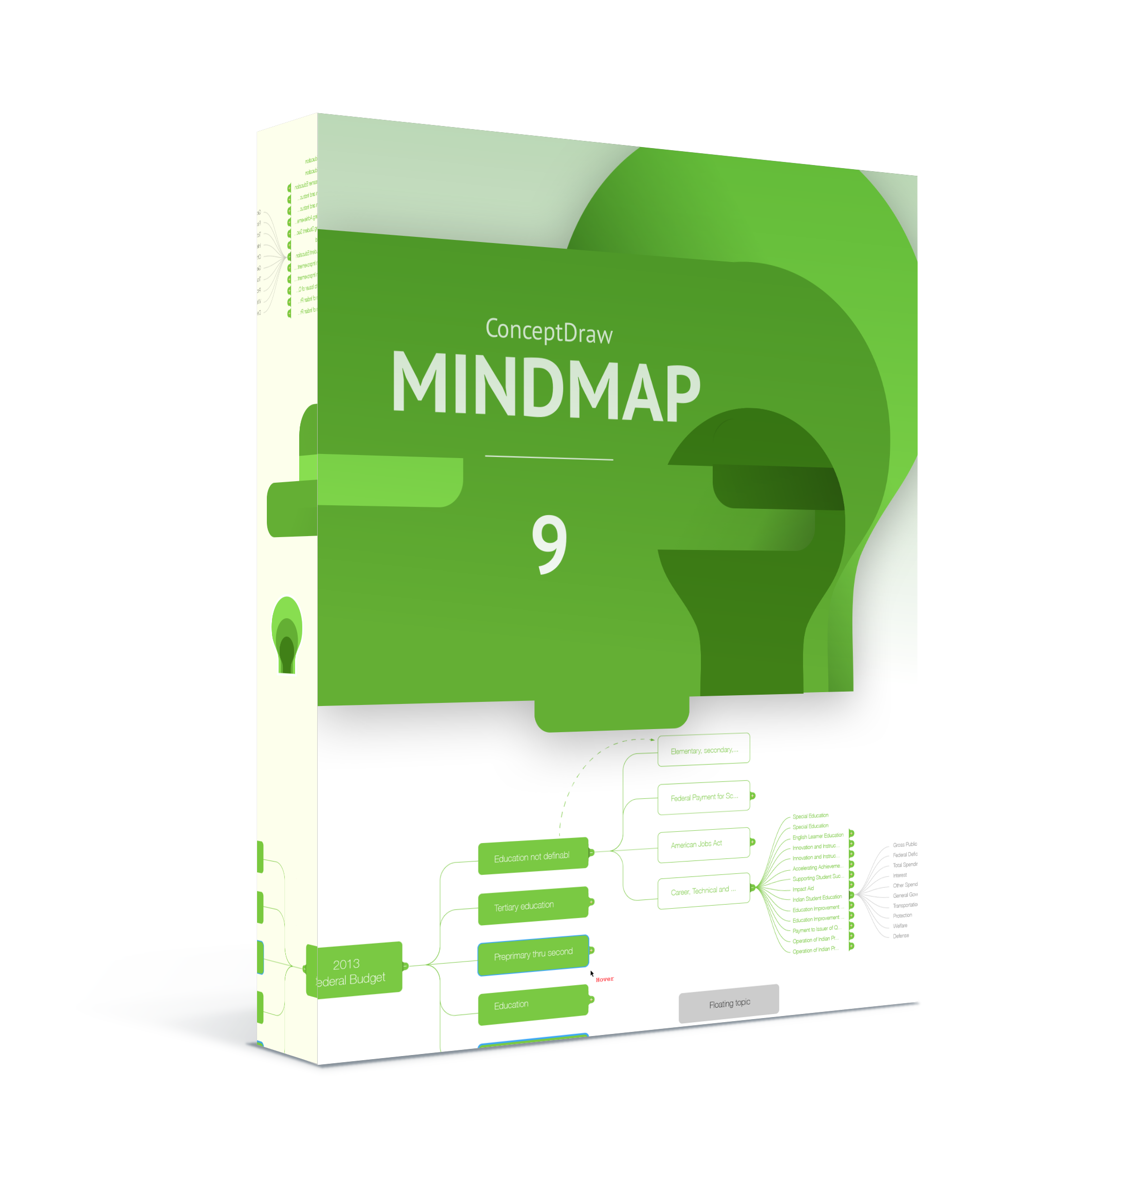 conceptdraw mindmap 7 download